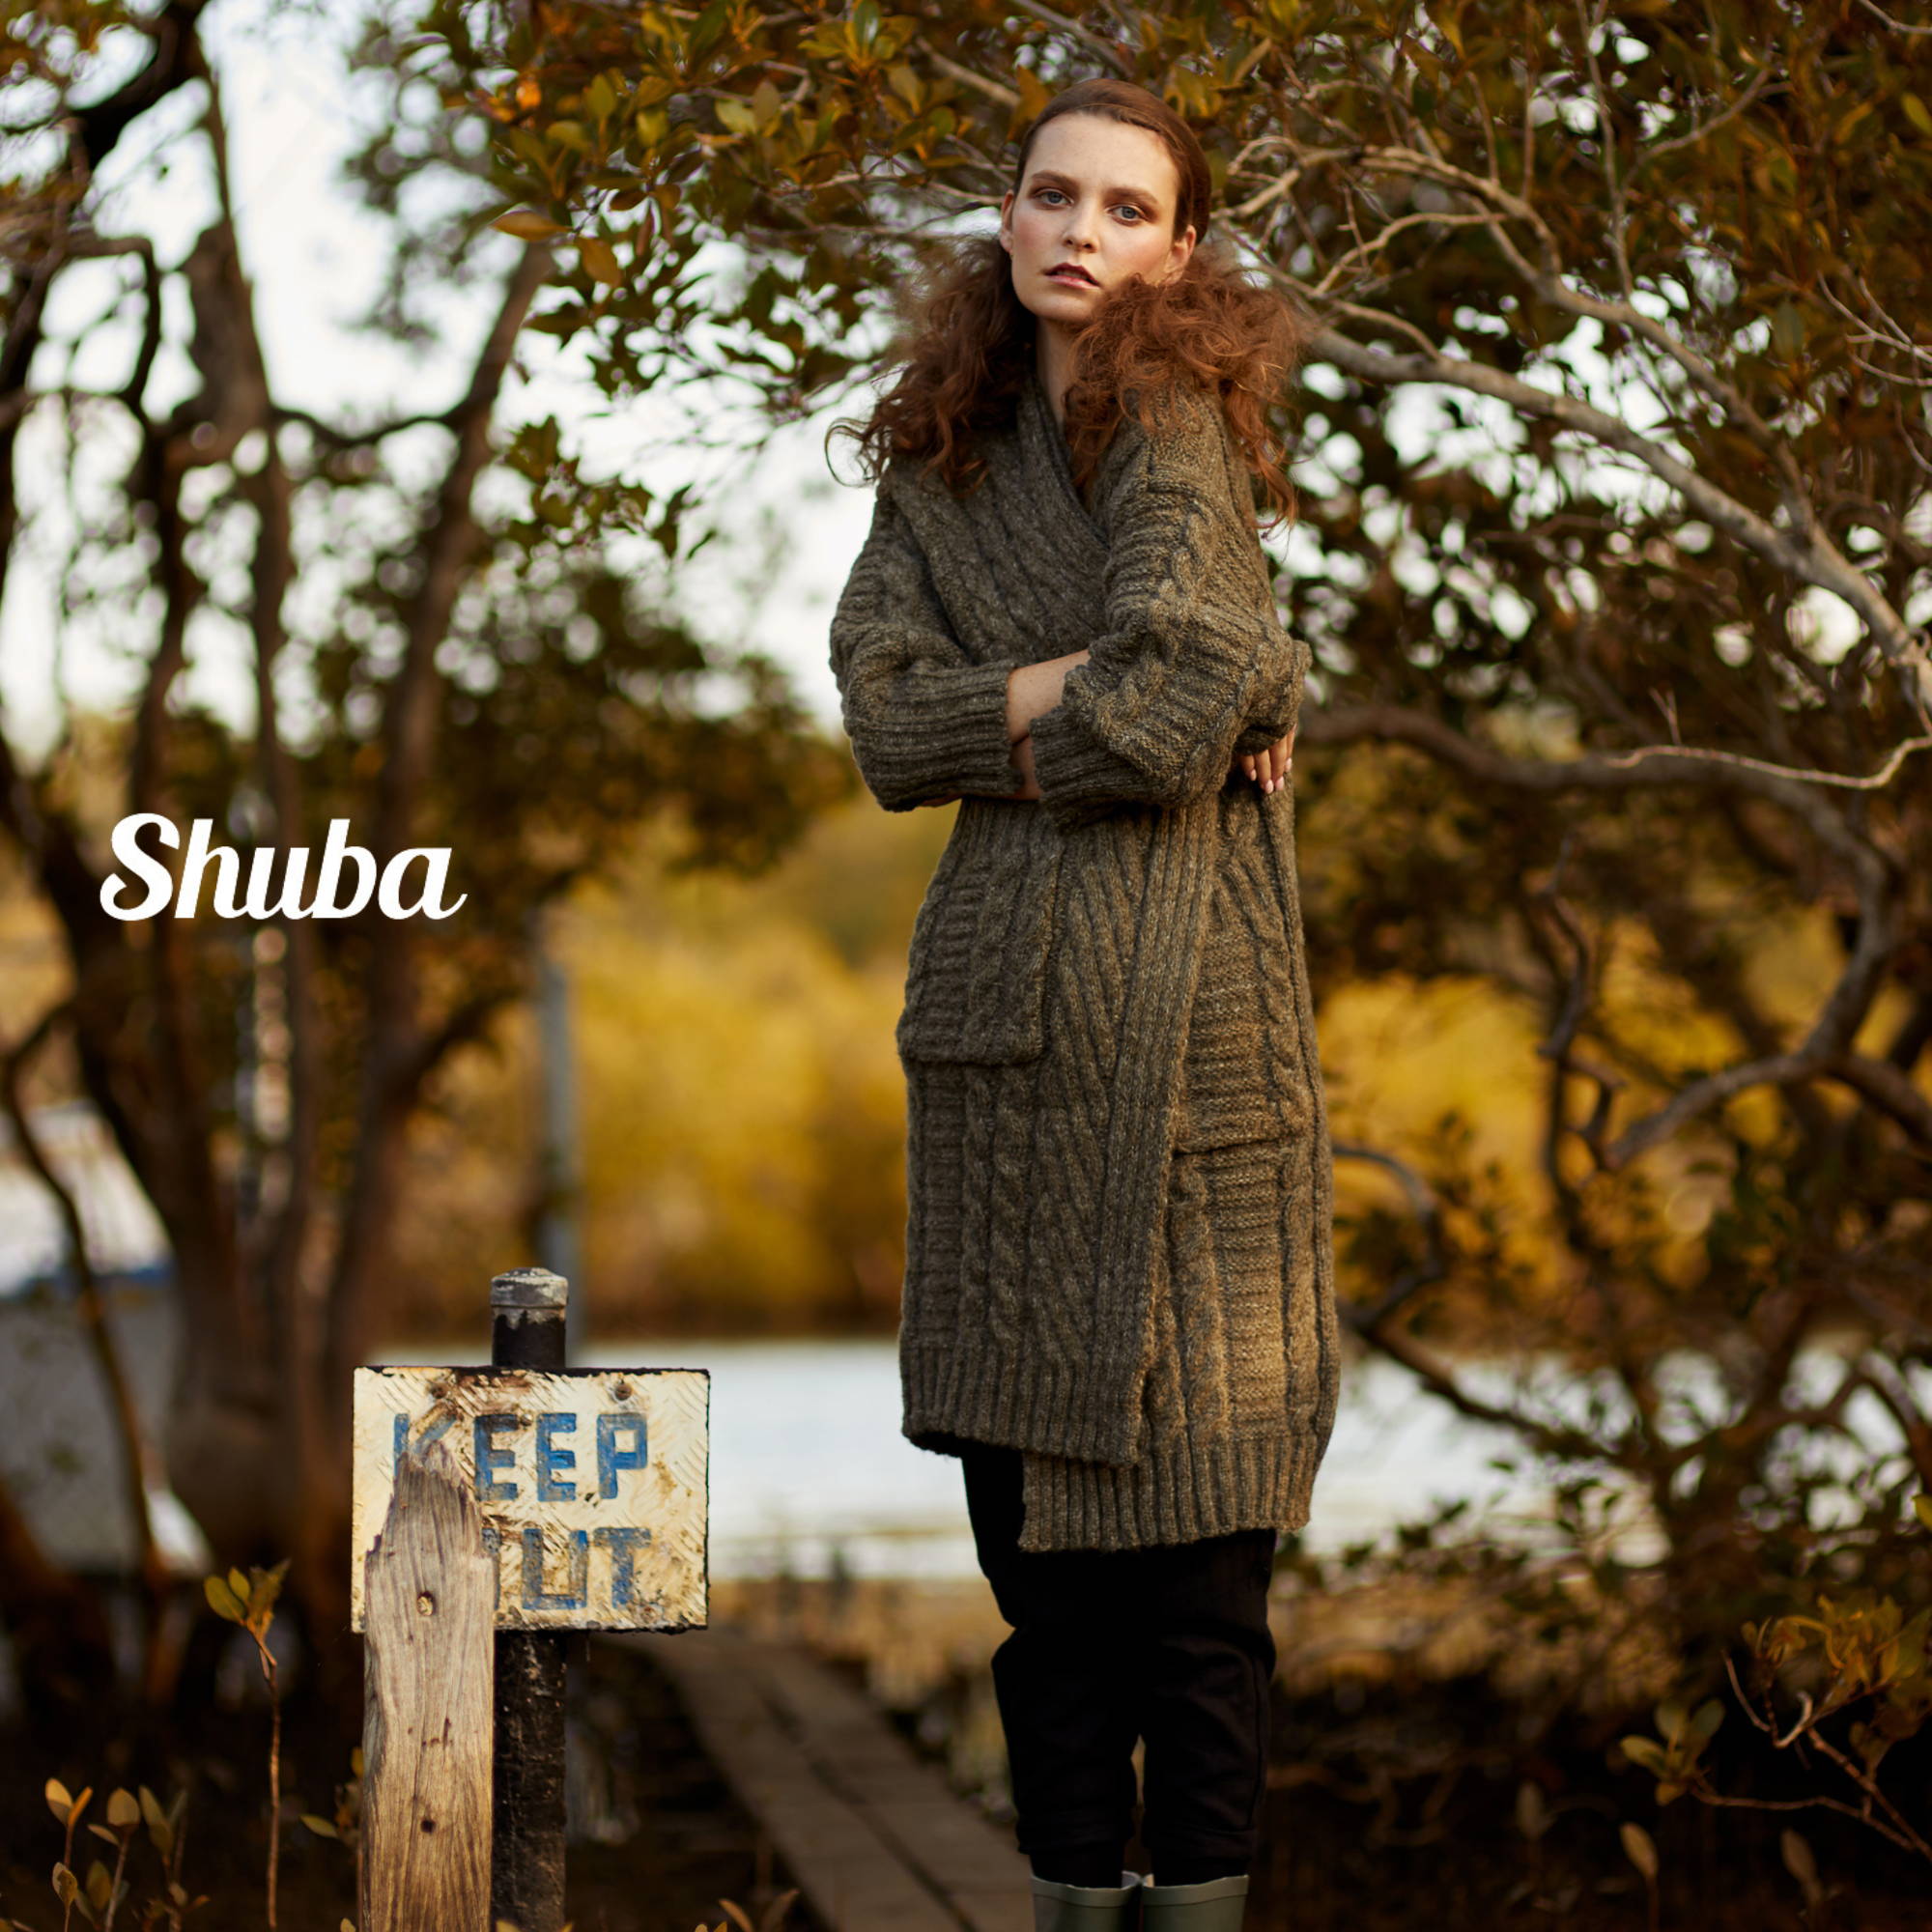 Shuba Magazine where Jill Turnbull was lead hair stylist